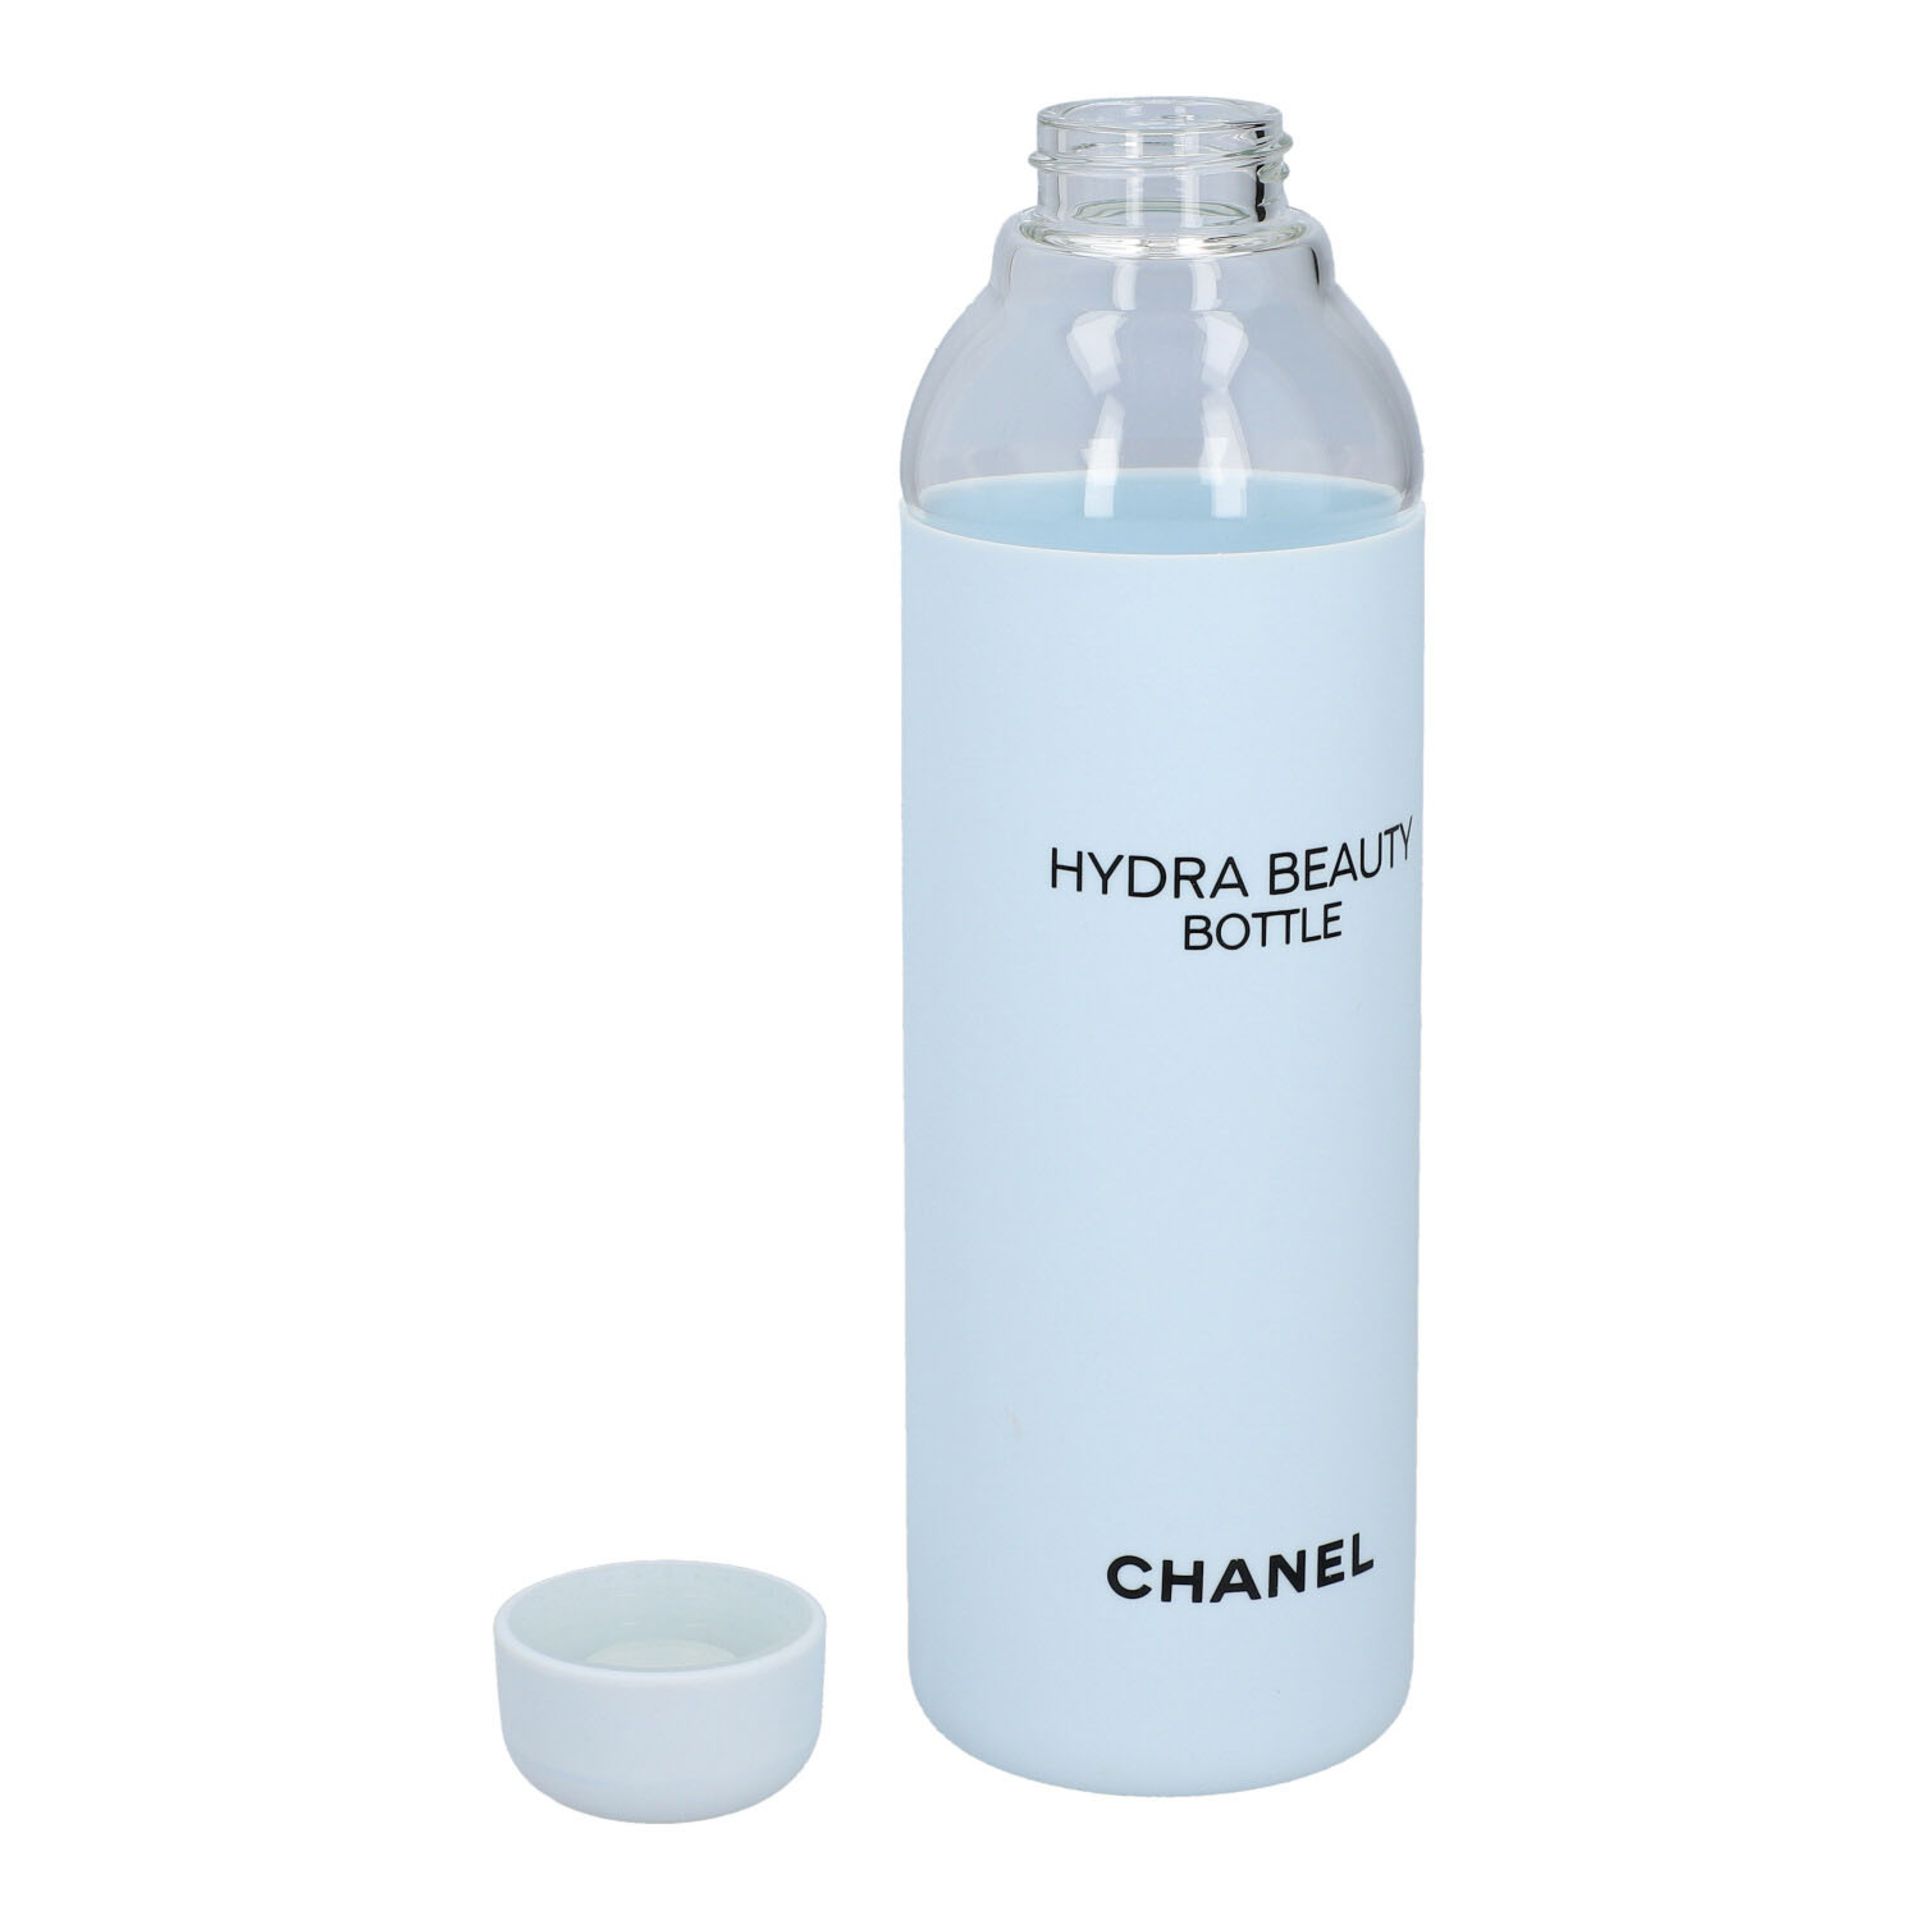 CHANEL Flasche "HYDRA BEAUTY BOTTLE". - Image 4 of 4